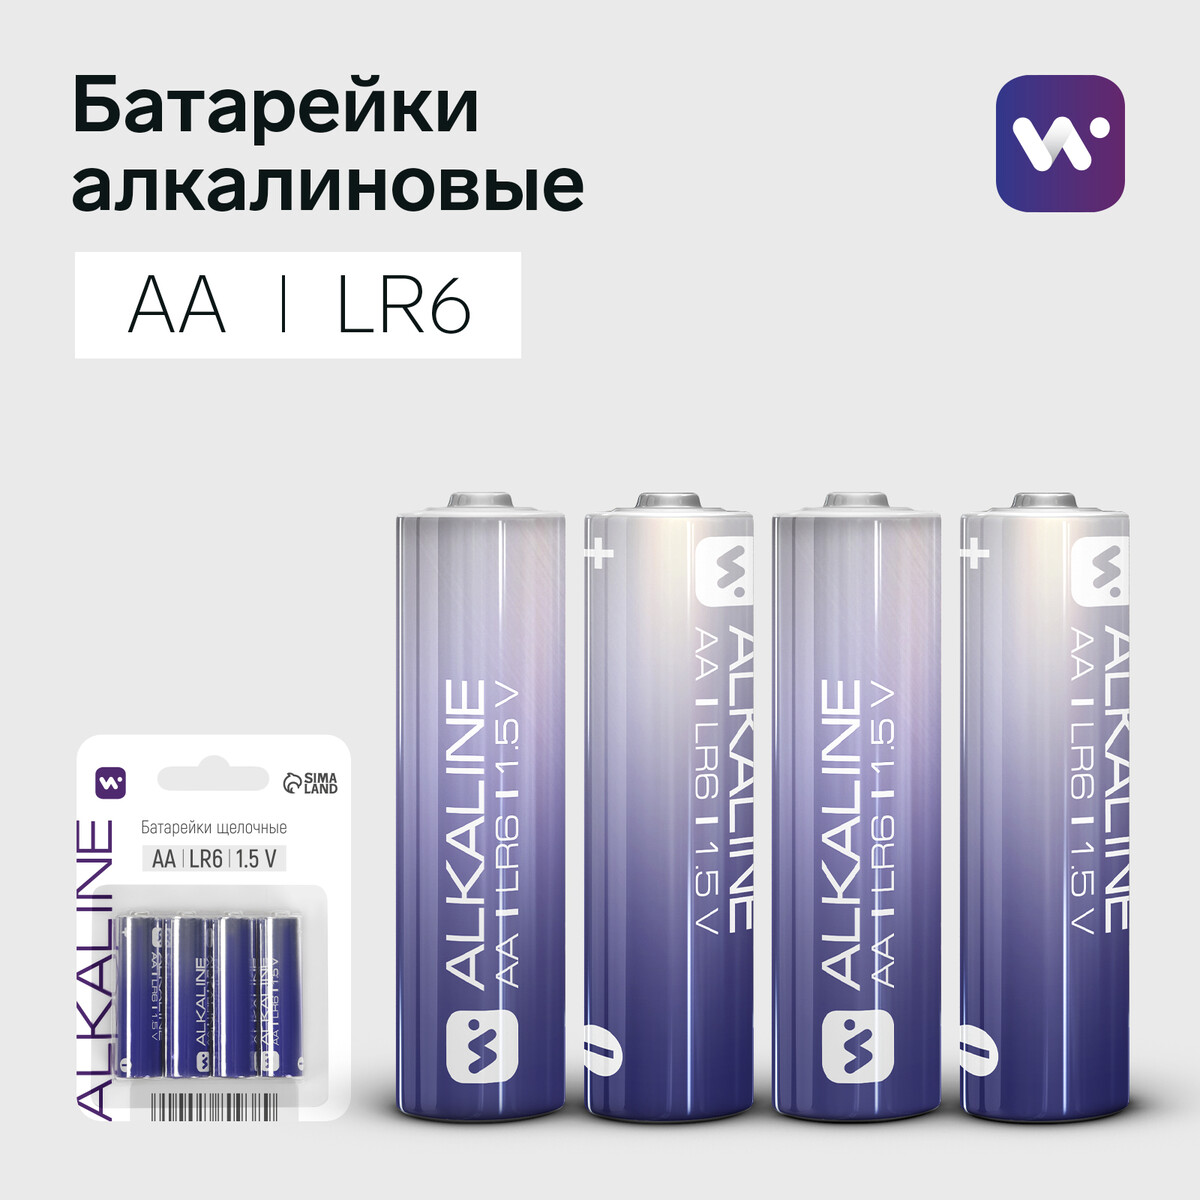 Батарейка алкалиновая windigo, aa, lr6, блистер, 4 шт батарейка ergolux аа lr06 lr6 alkaline алкалиновая 1 5 в блистер 4 шт 11748